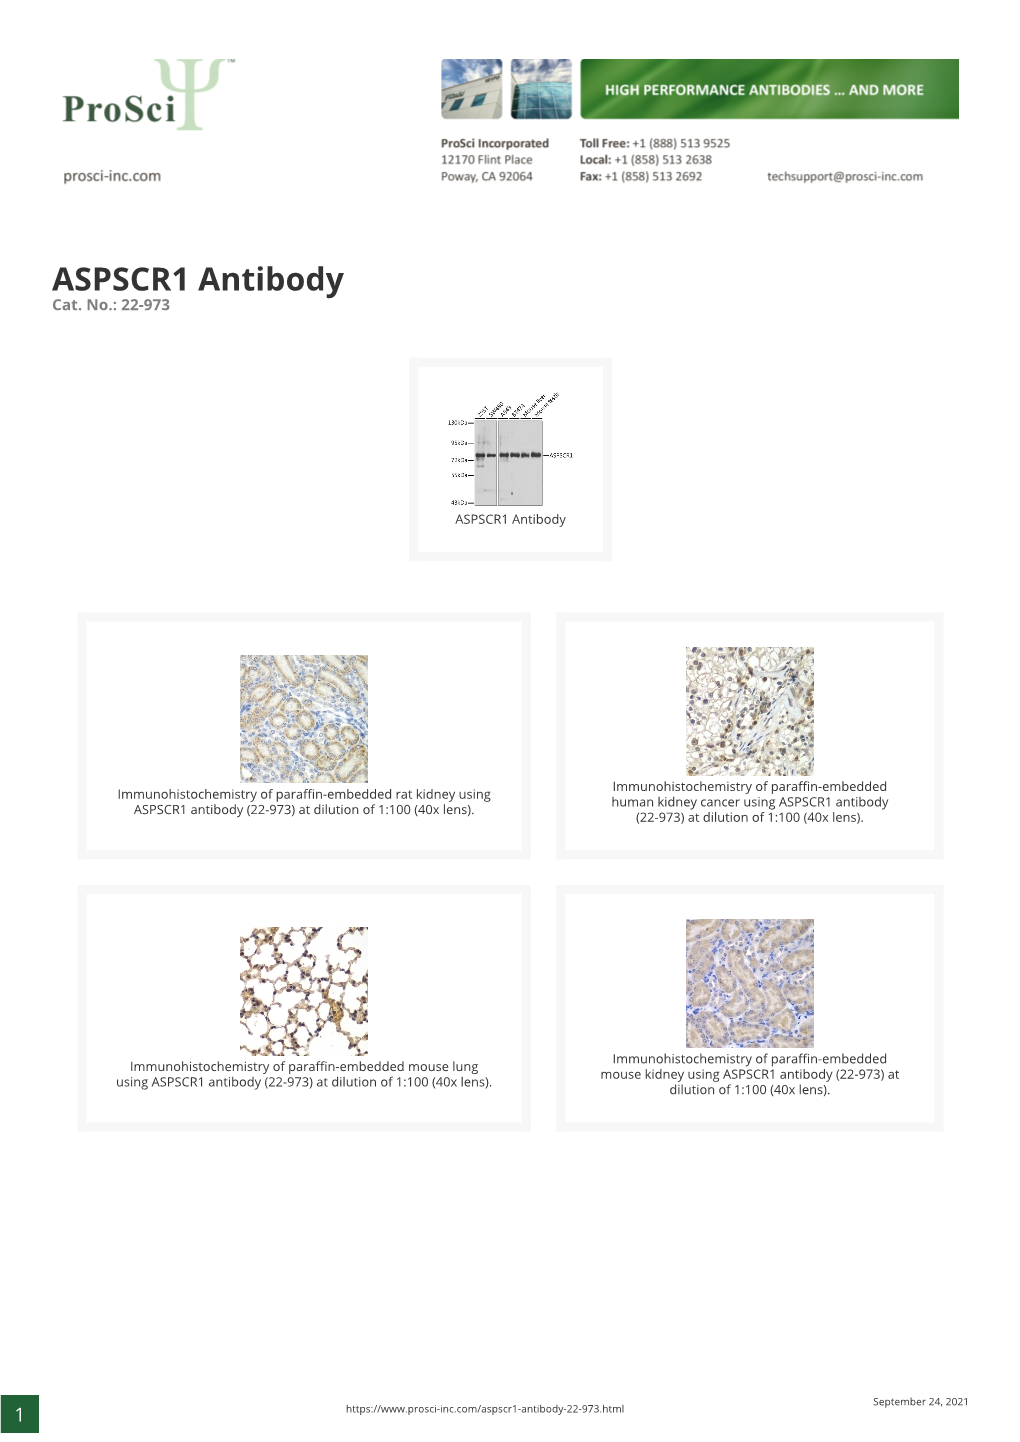 ASPSCR1 Antibody Cat